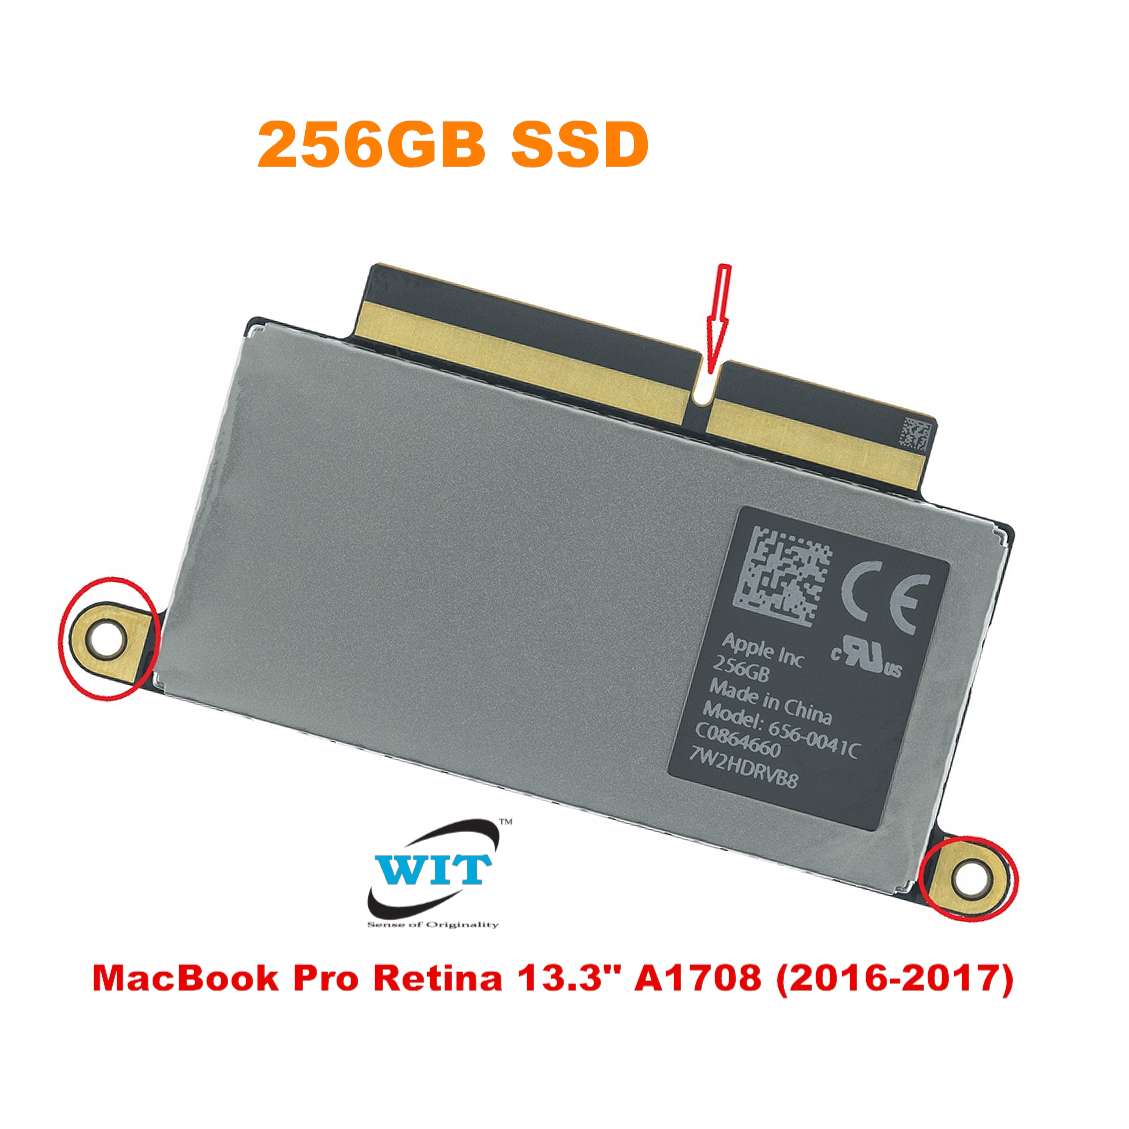 256GB SSD for MacBook Pro Retina 13.3